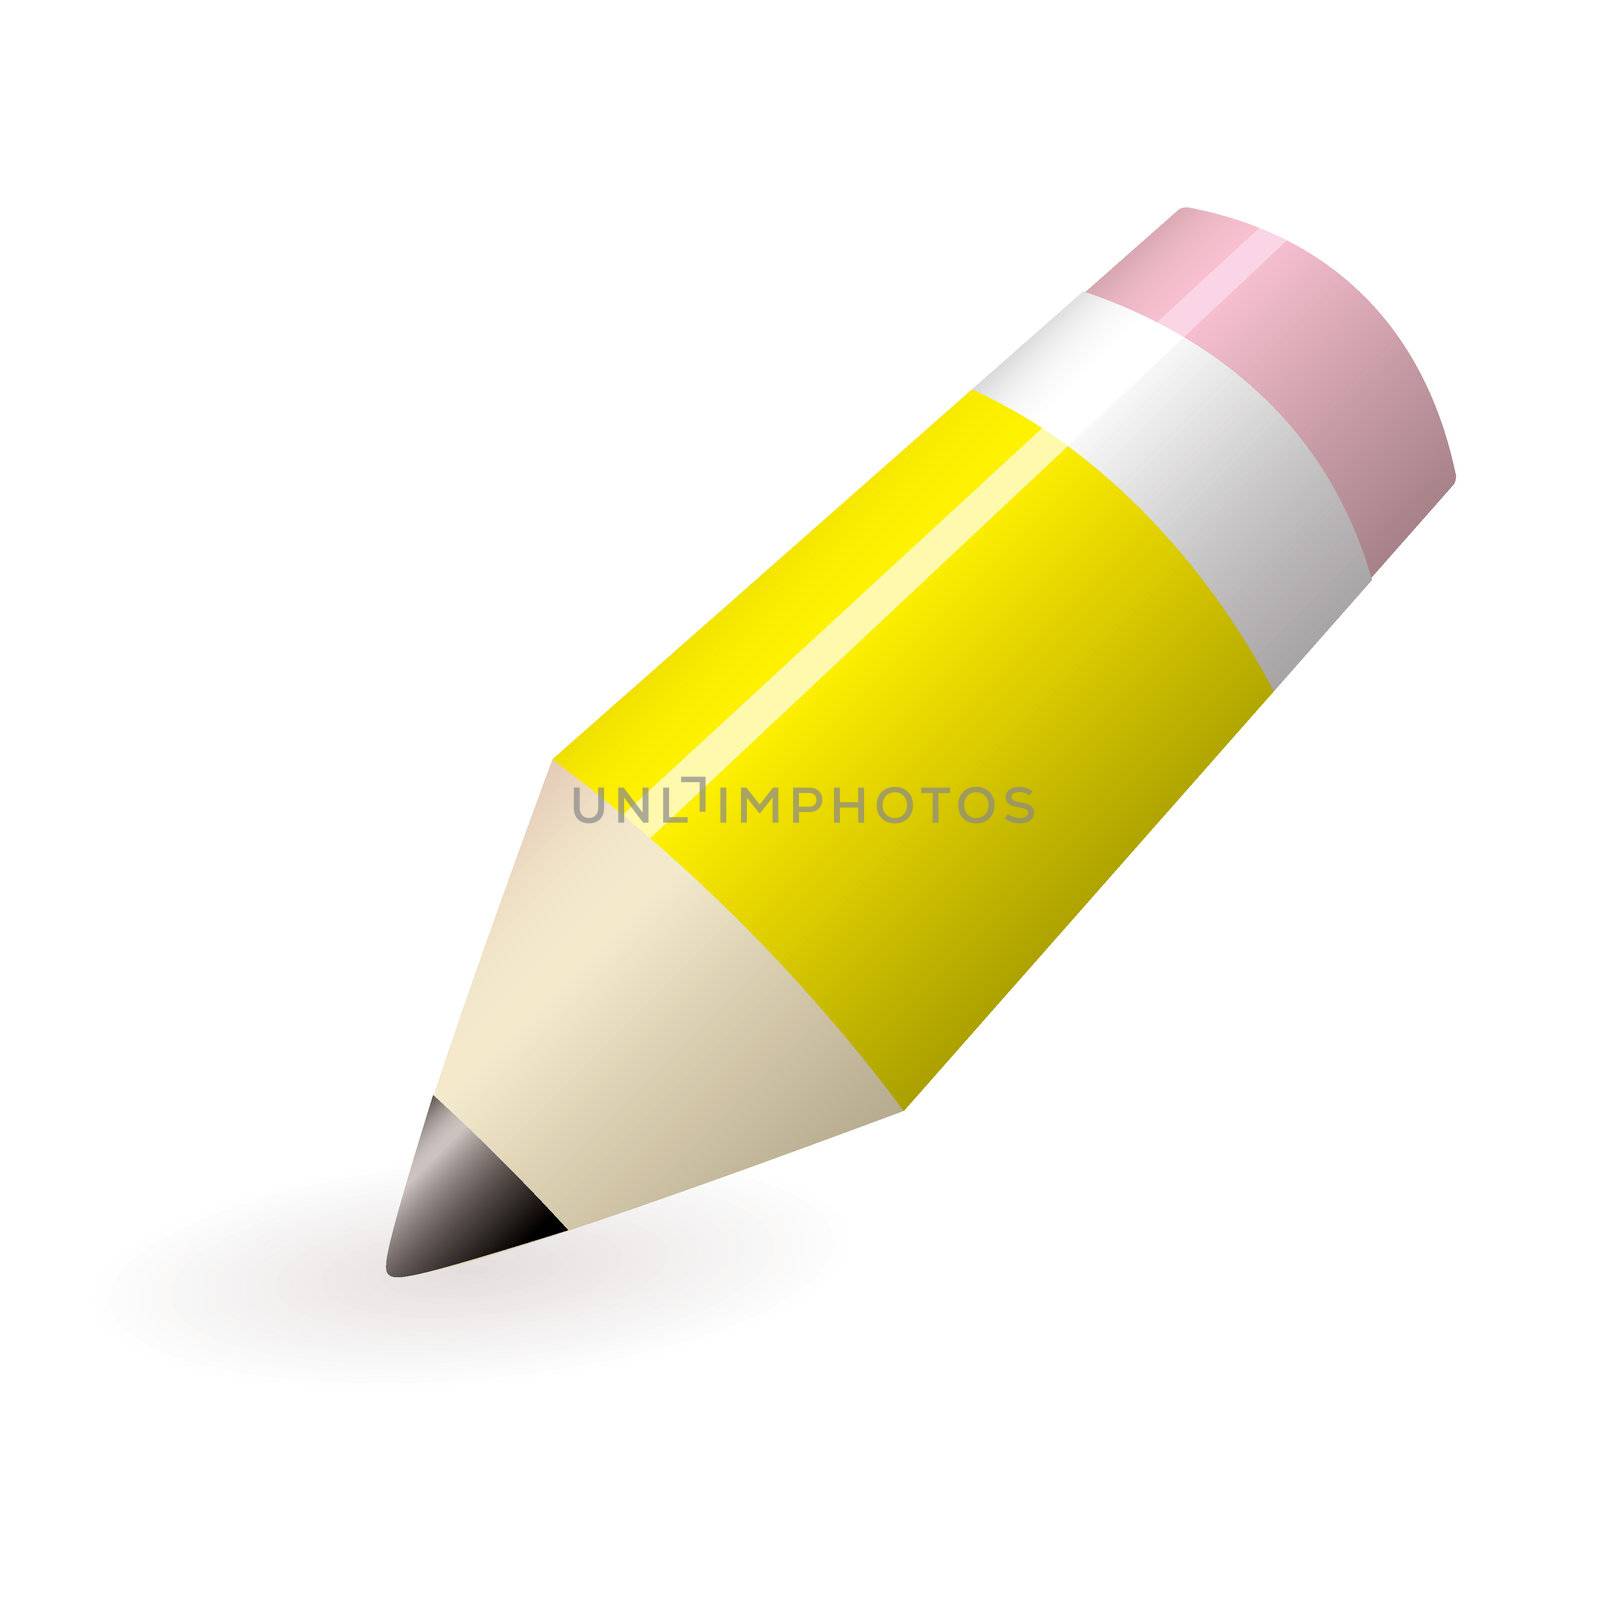 Lead pencil by nicemonkey